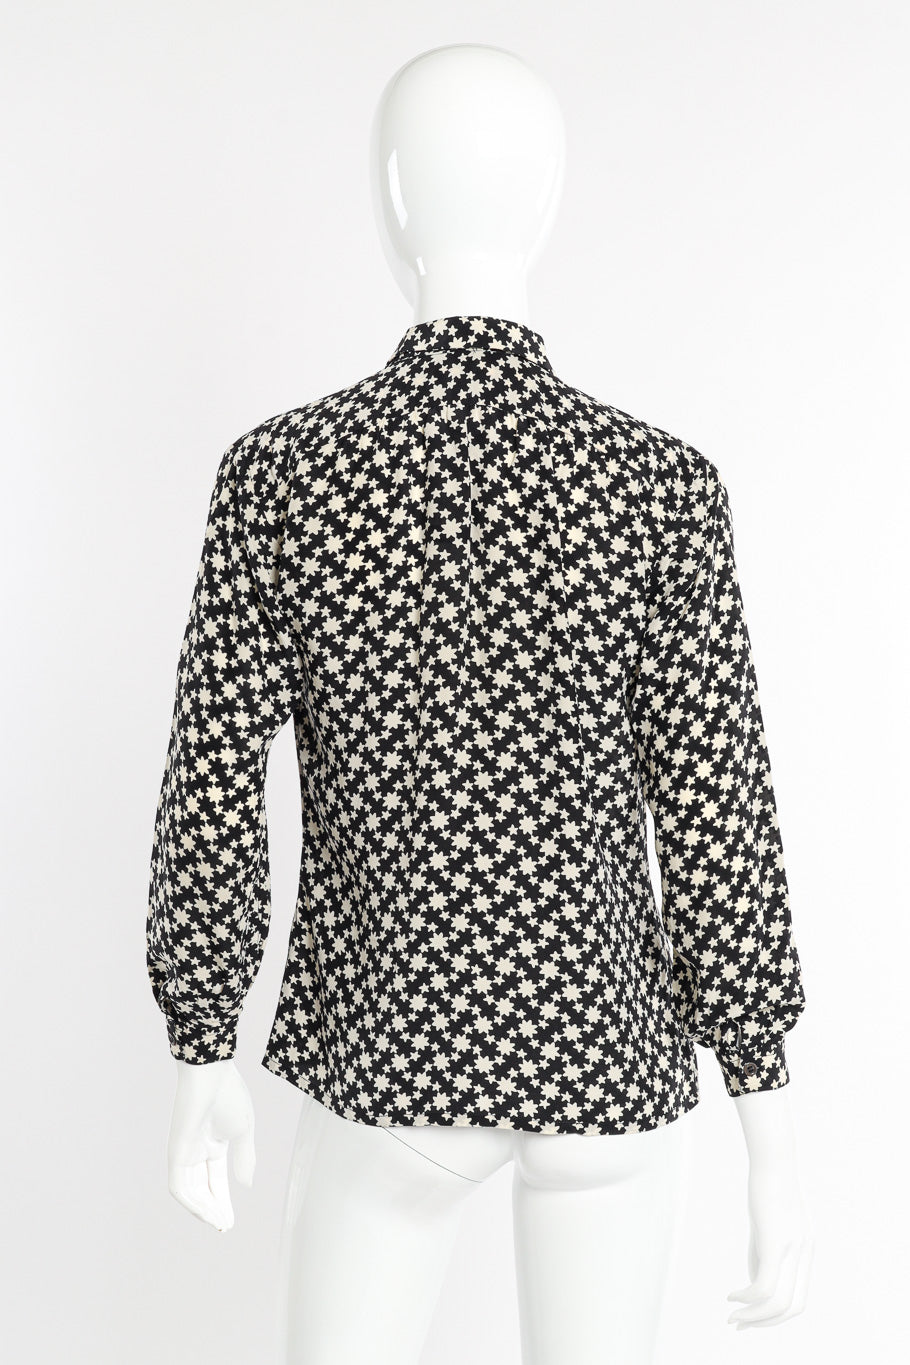 Star print blouse by Yves Saint Laurent on mannequin back @recessla